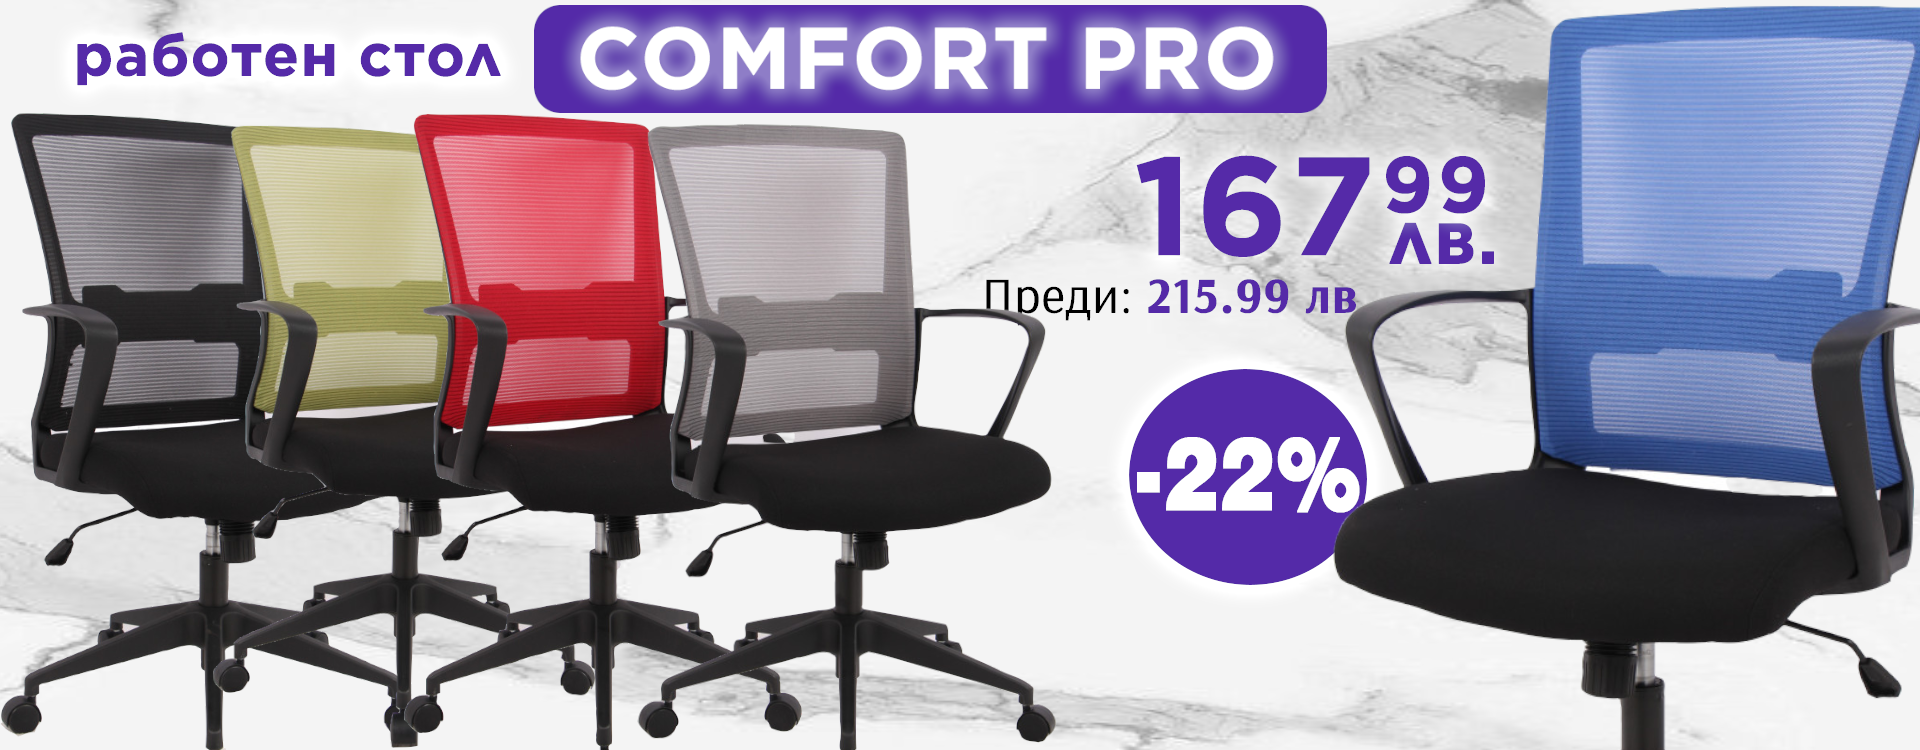  Намаление на работн стол Comfort Pro -22%